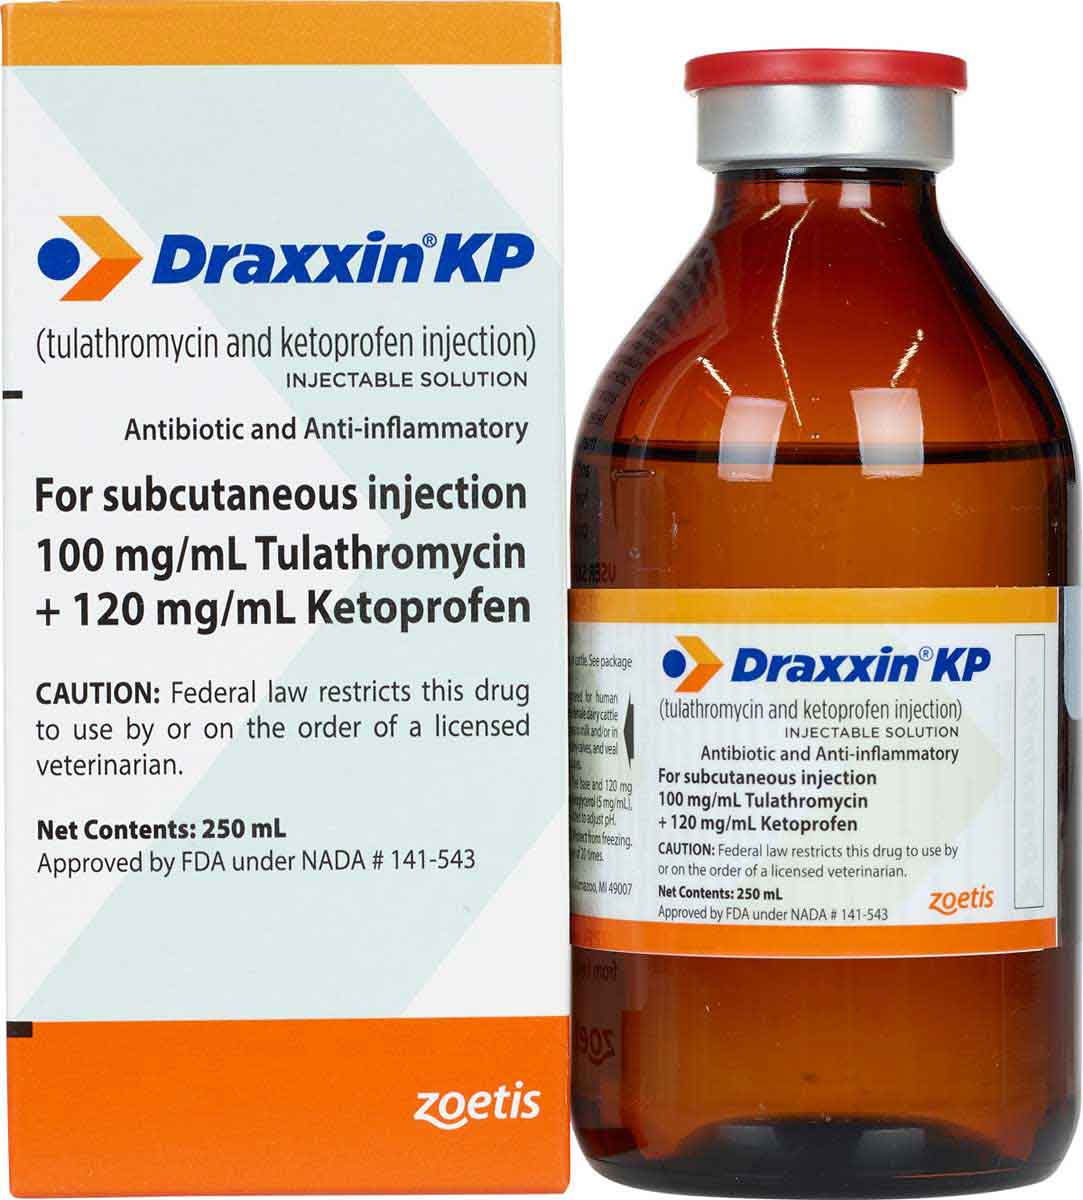 draxxin-kp-injectable-solution-santa-cruz-animal-health